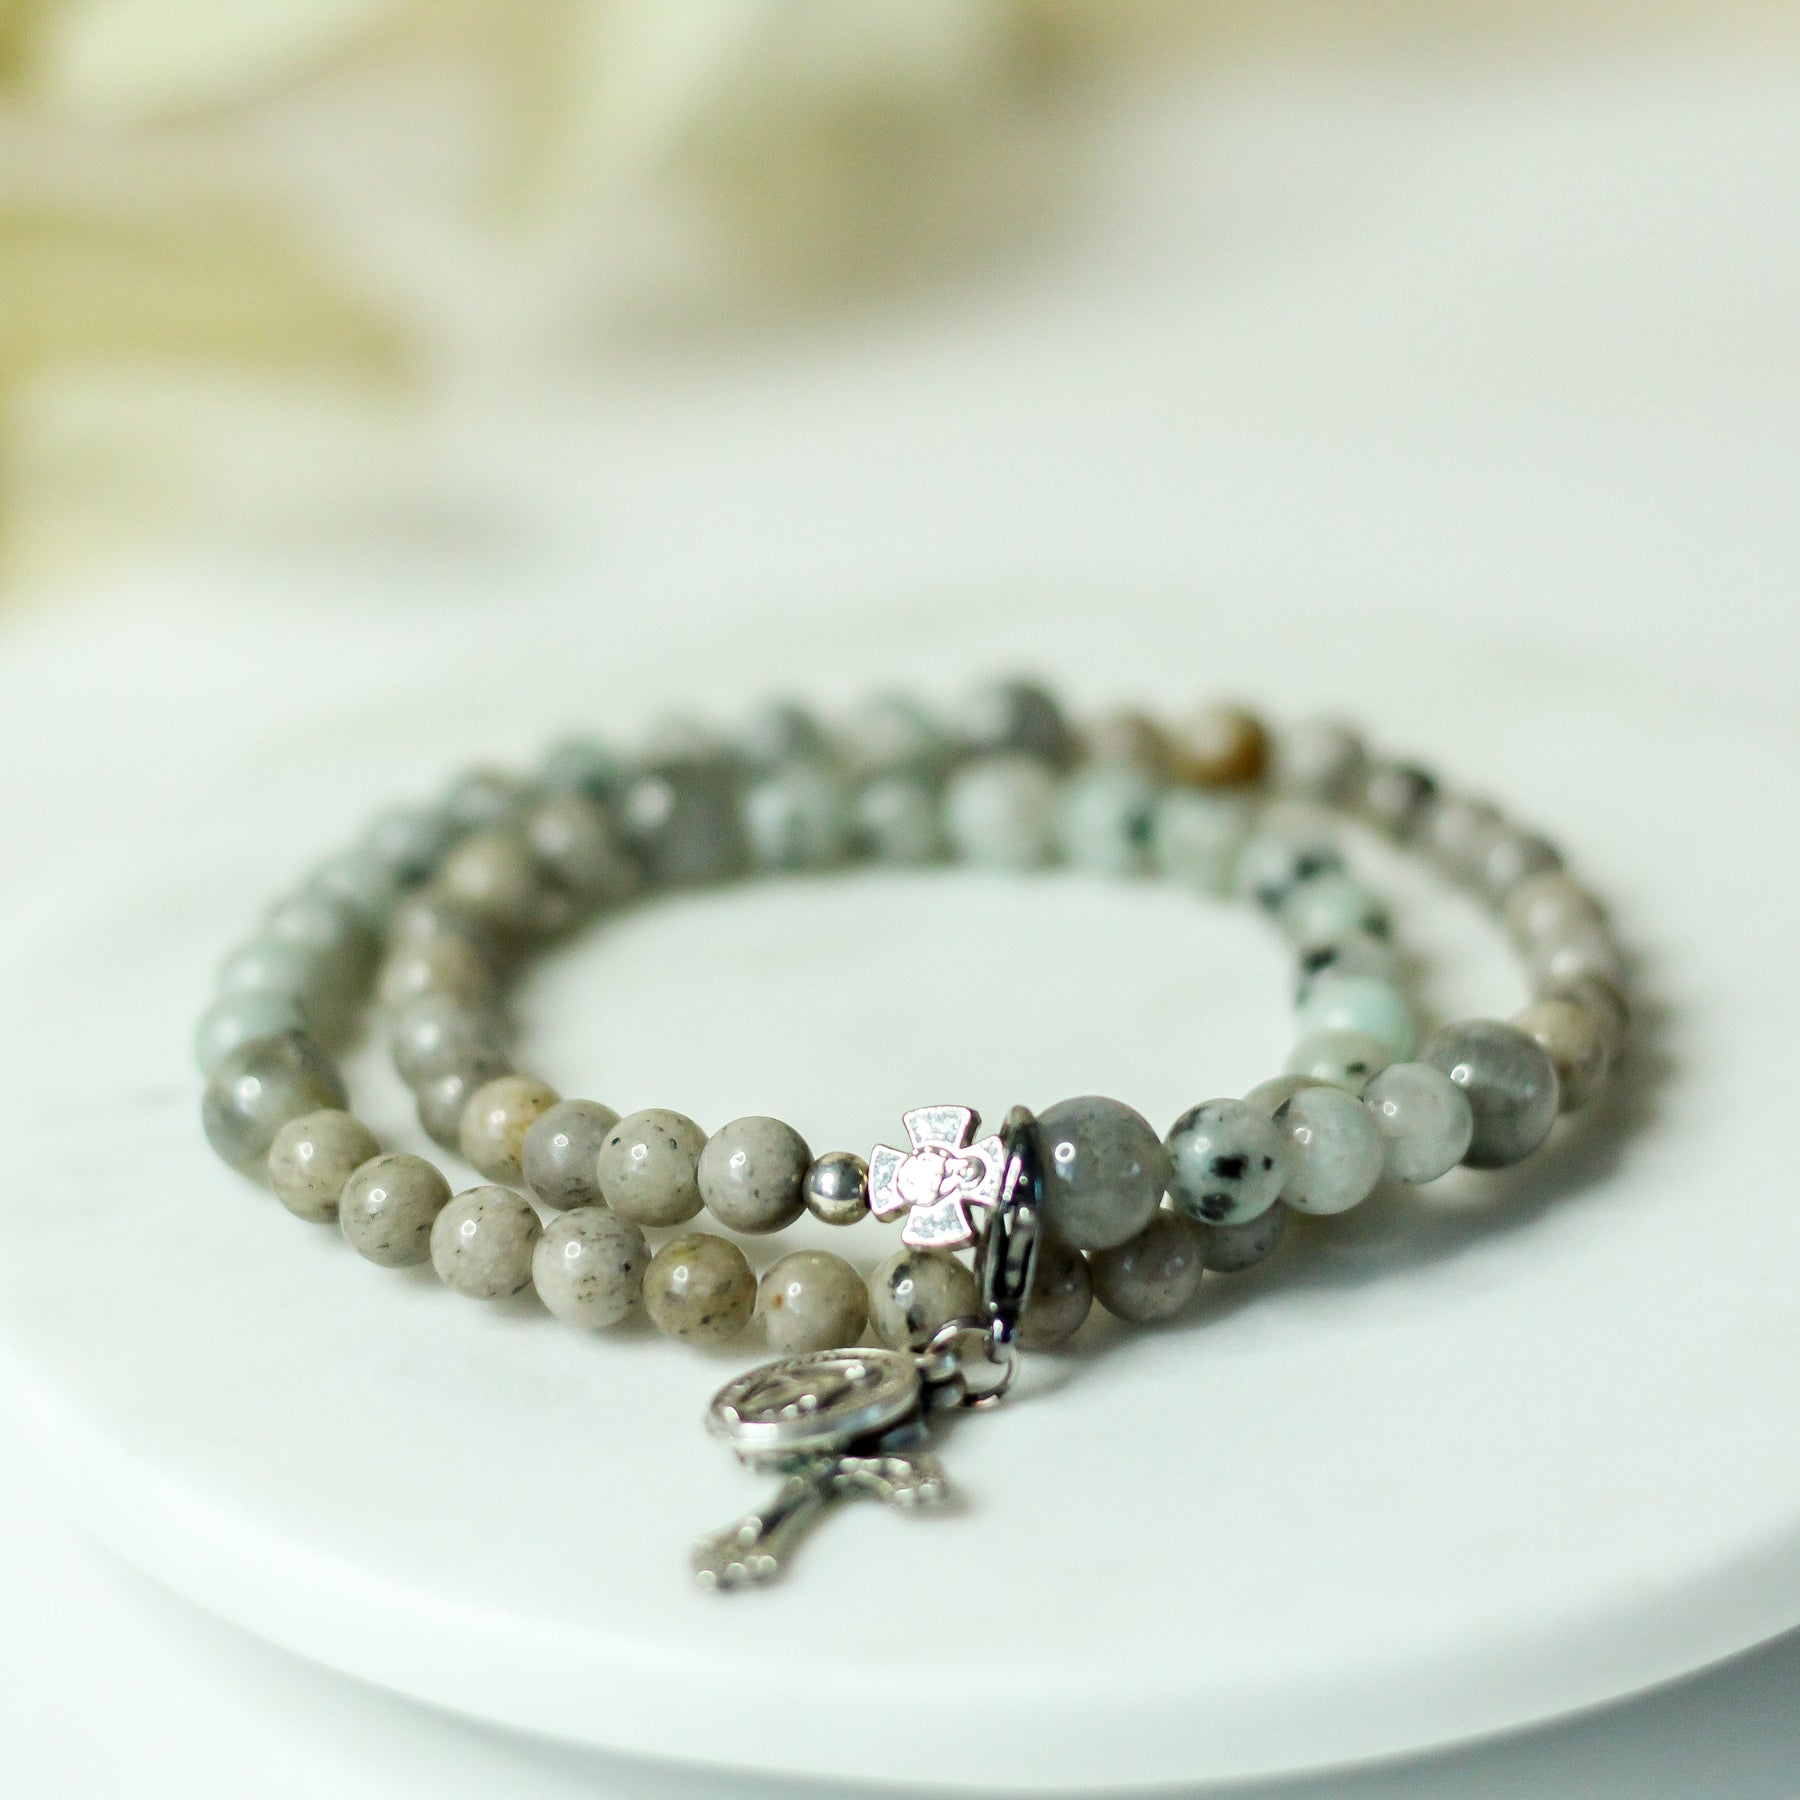 Vianney | Stretch & Wrap Rosary Bracelet | Small & Medium